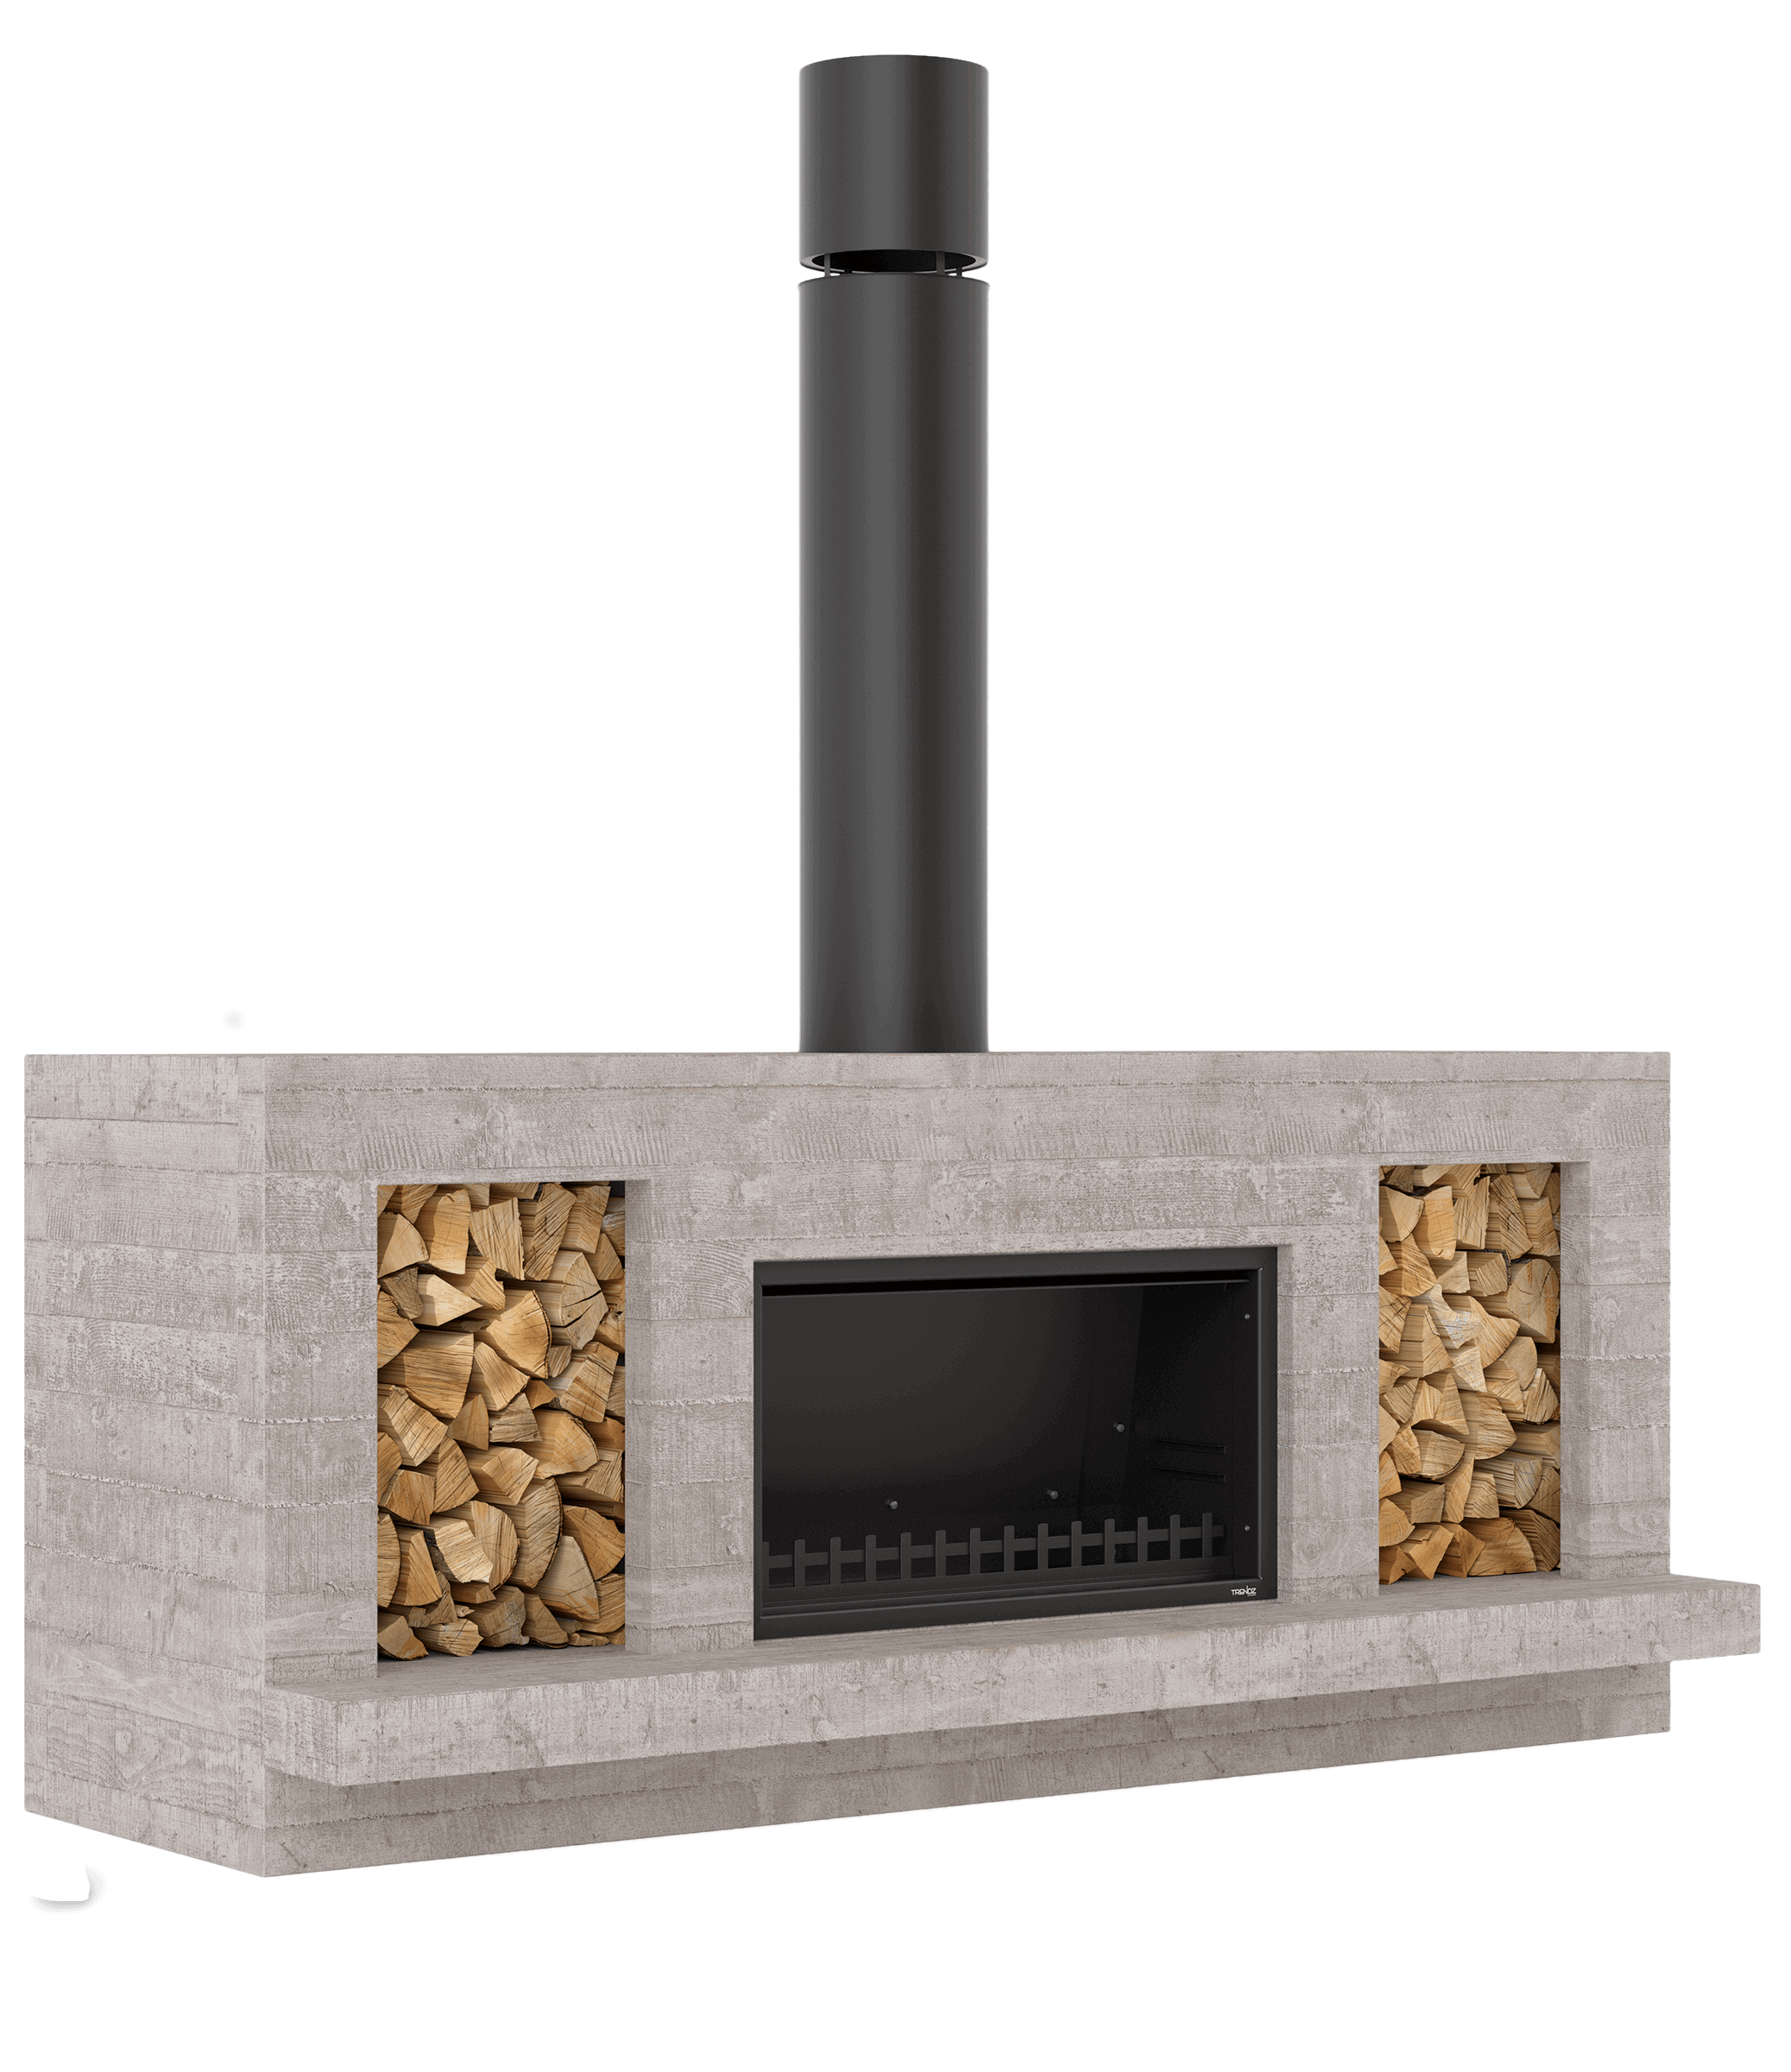 Single peak outdoor fireplace